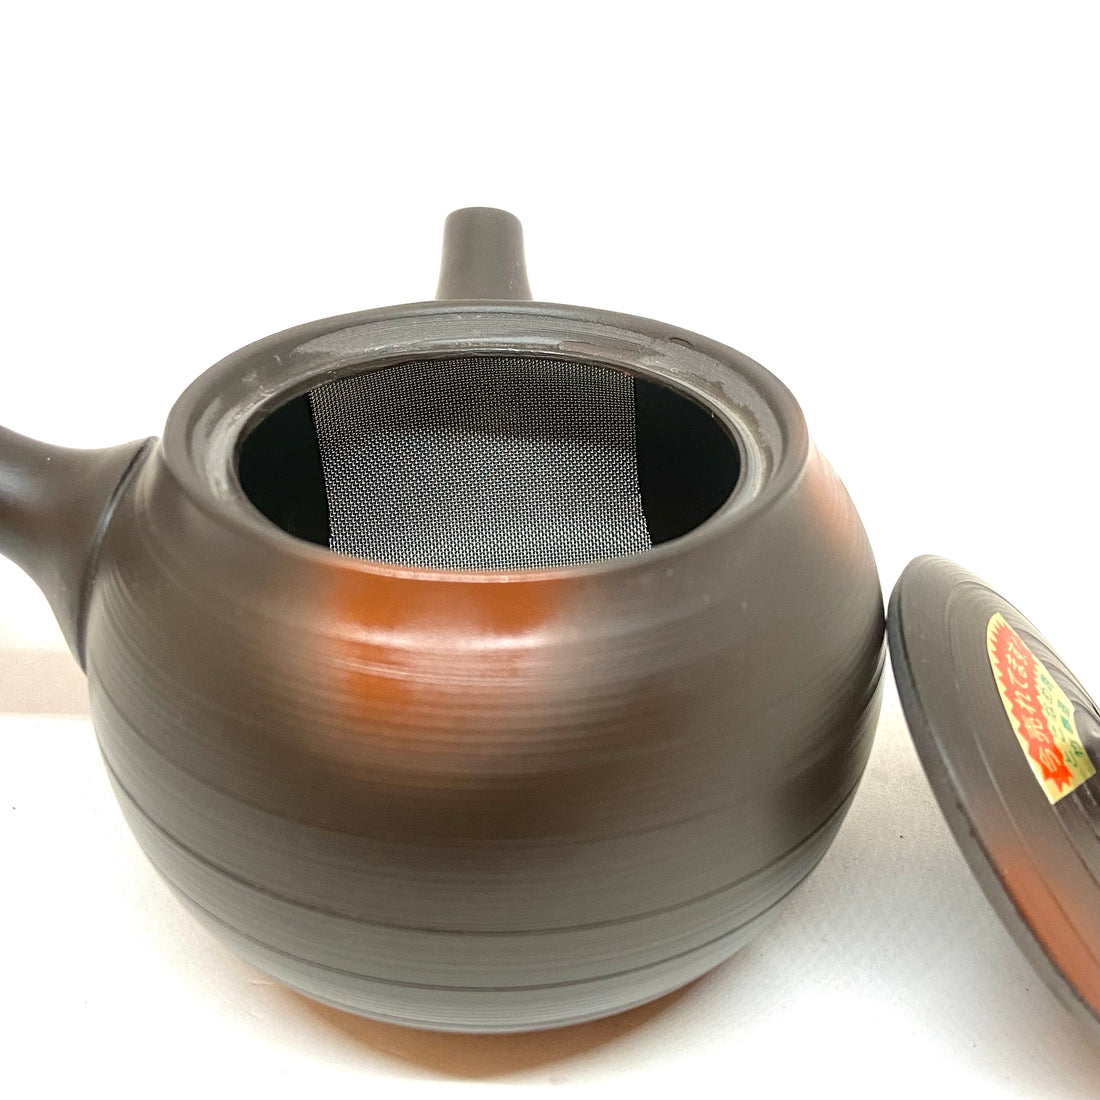 Kyusu Japanese Teapot - Faded Spots - 220ml #716